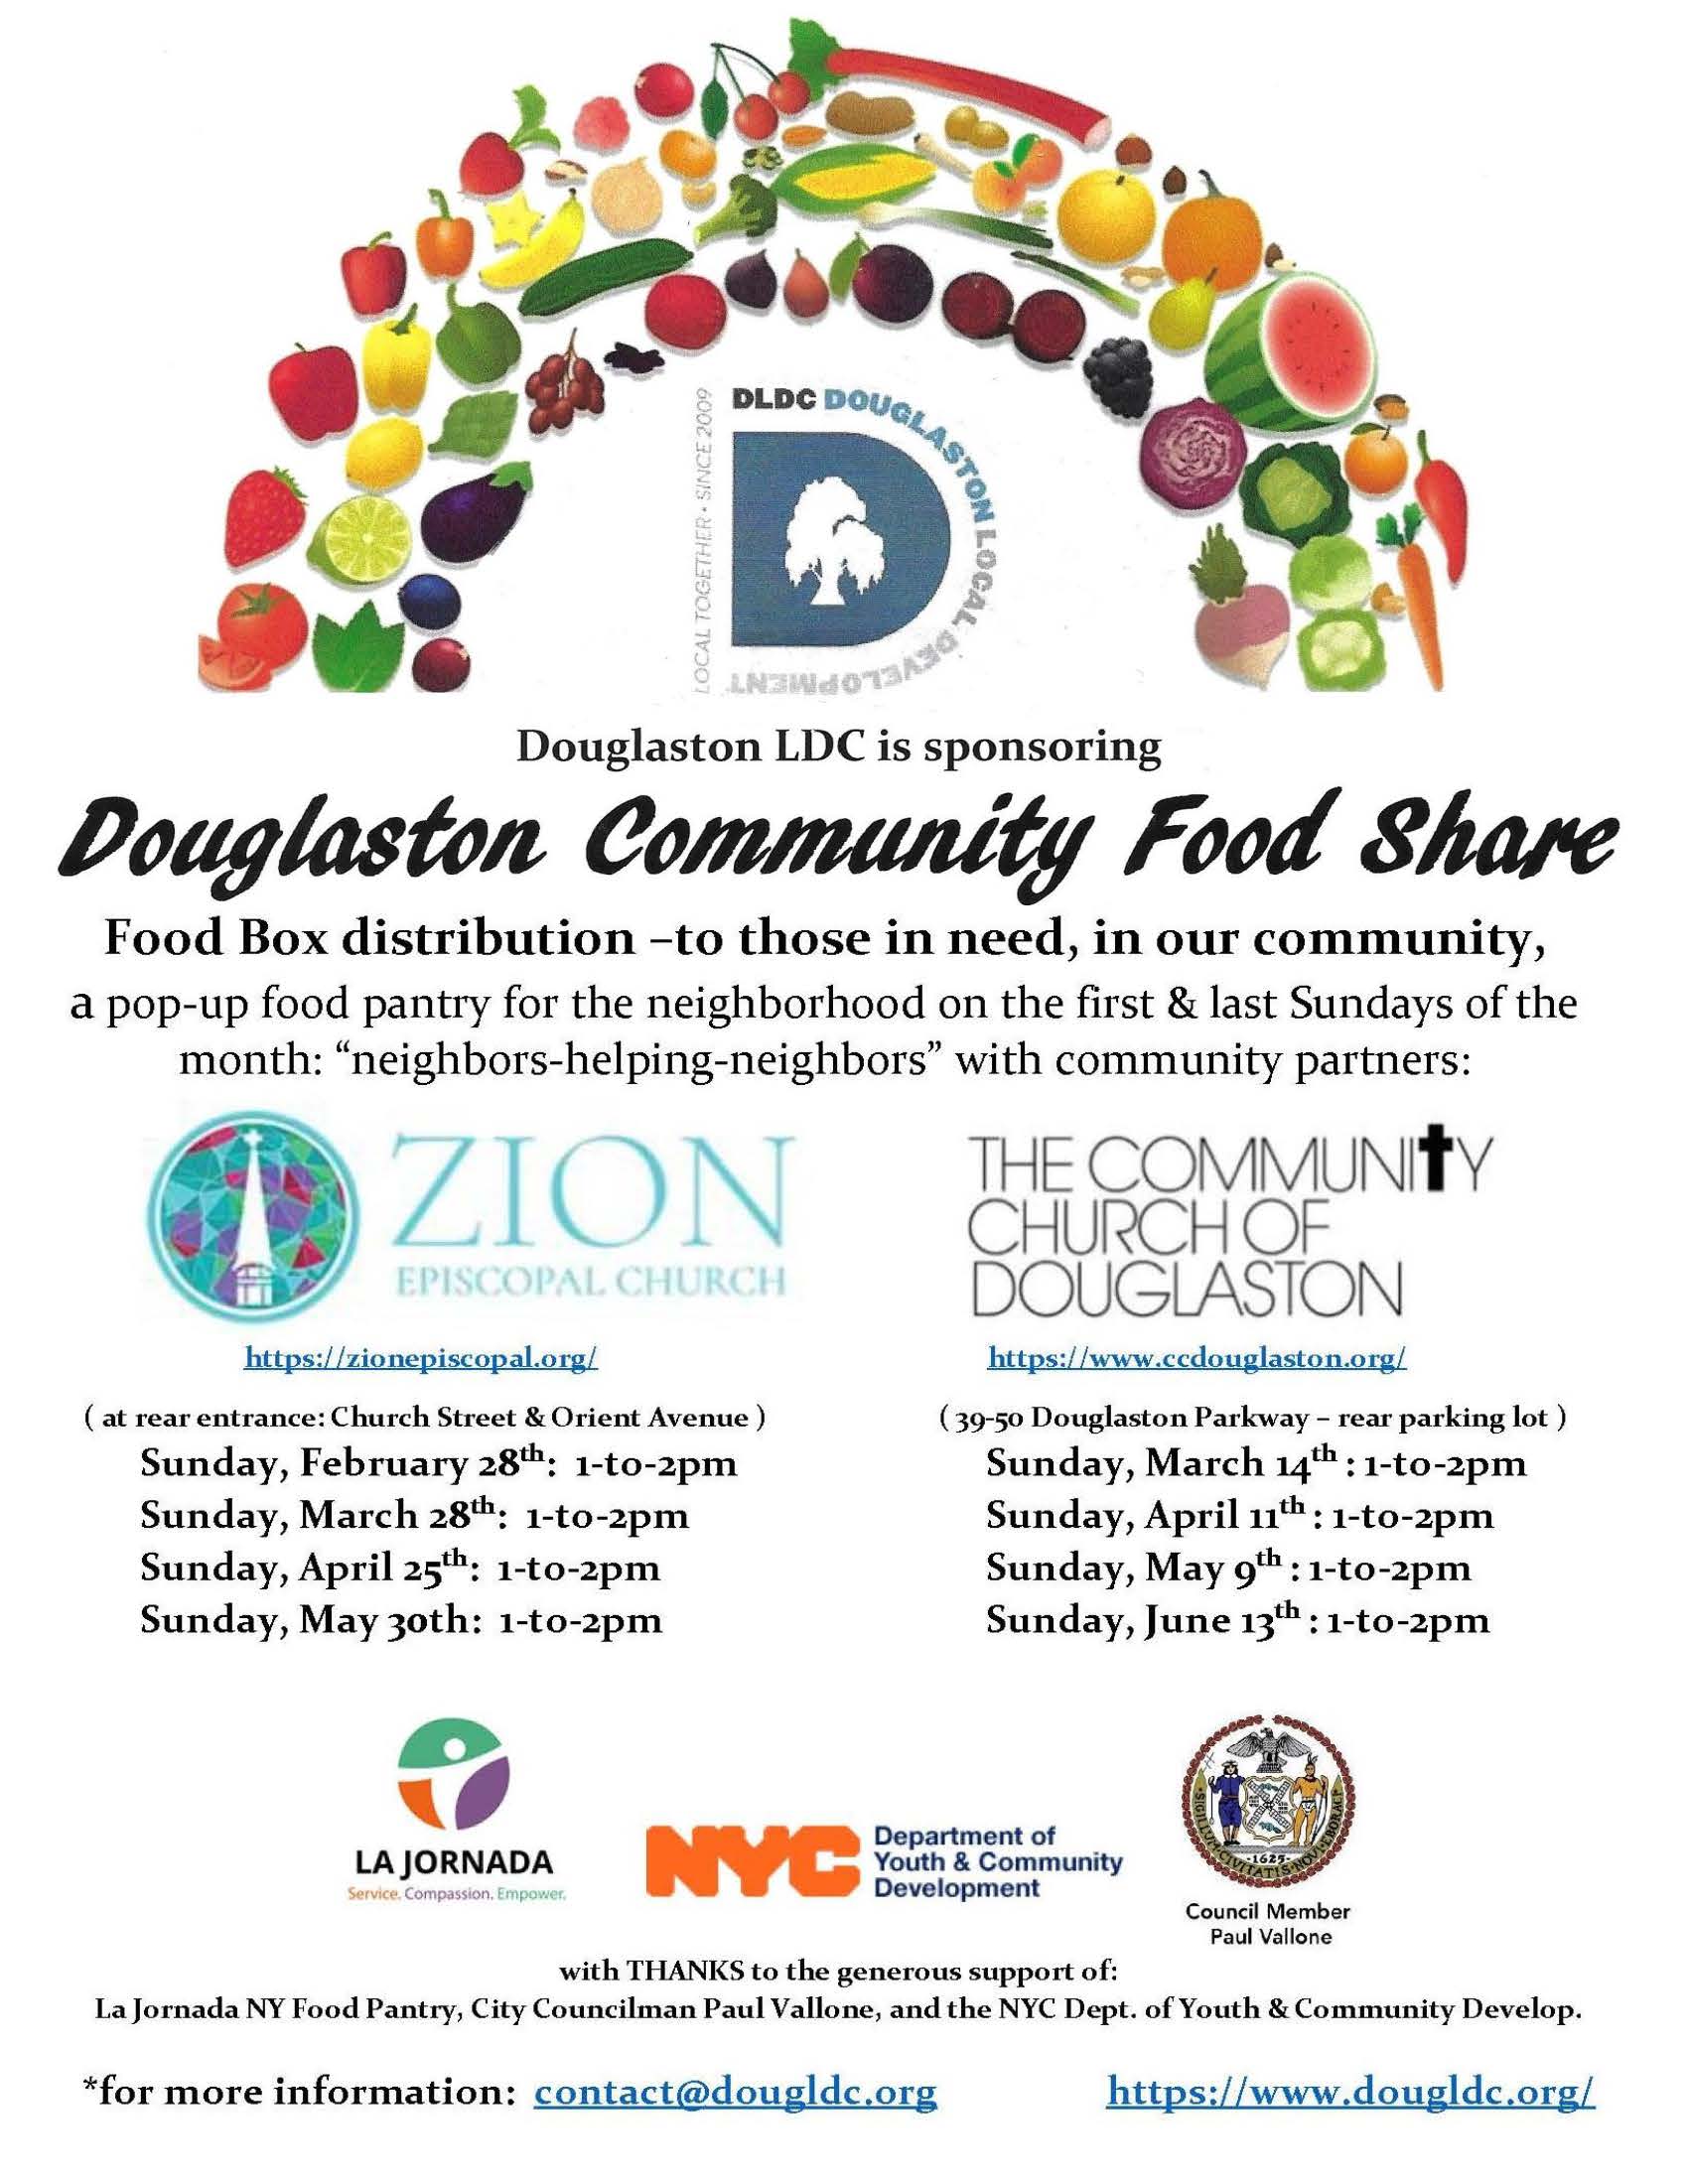 Douglaston Community Food Share @ Zion Episcopal Church